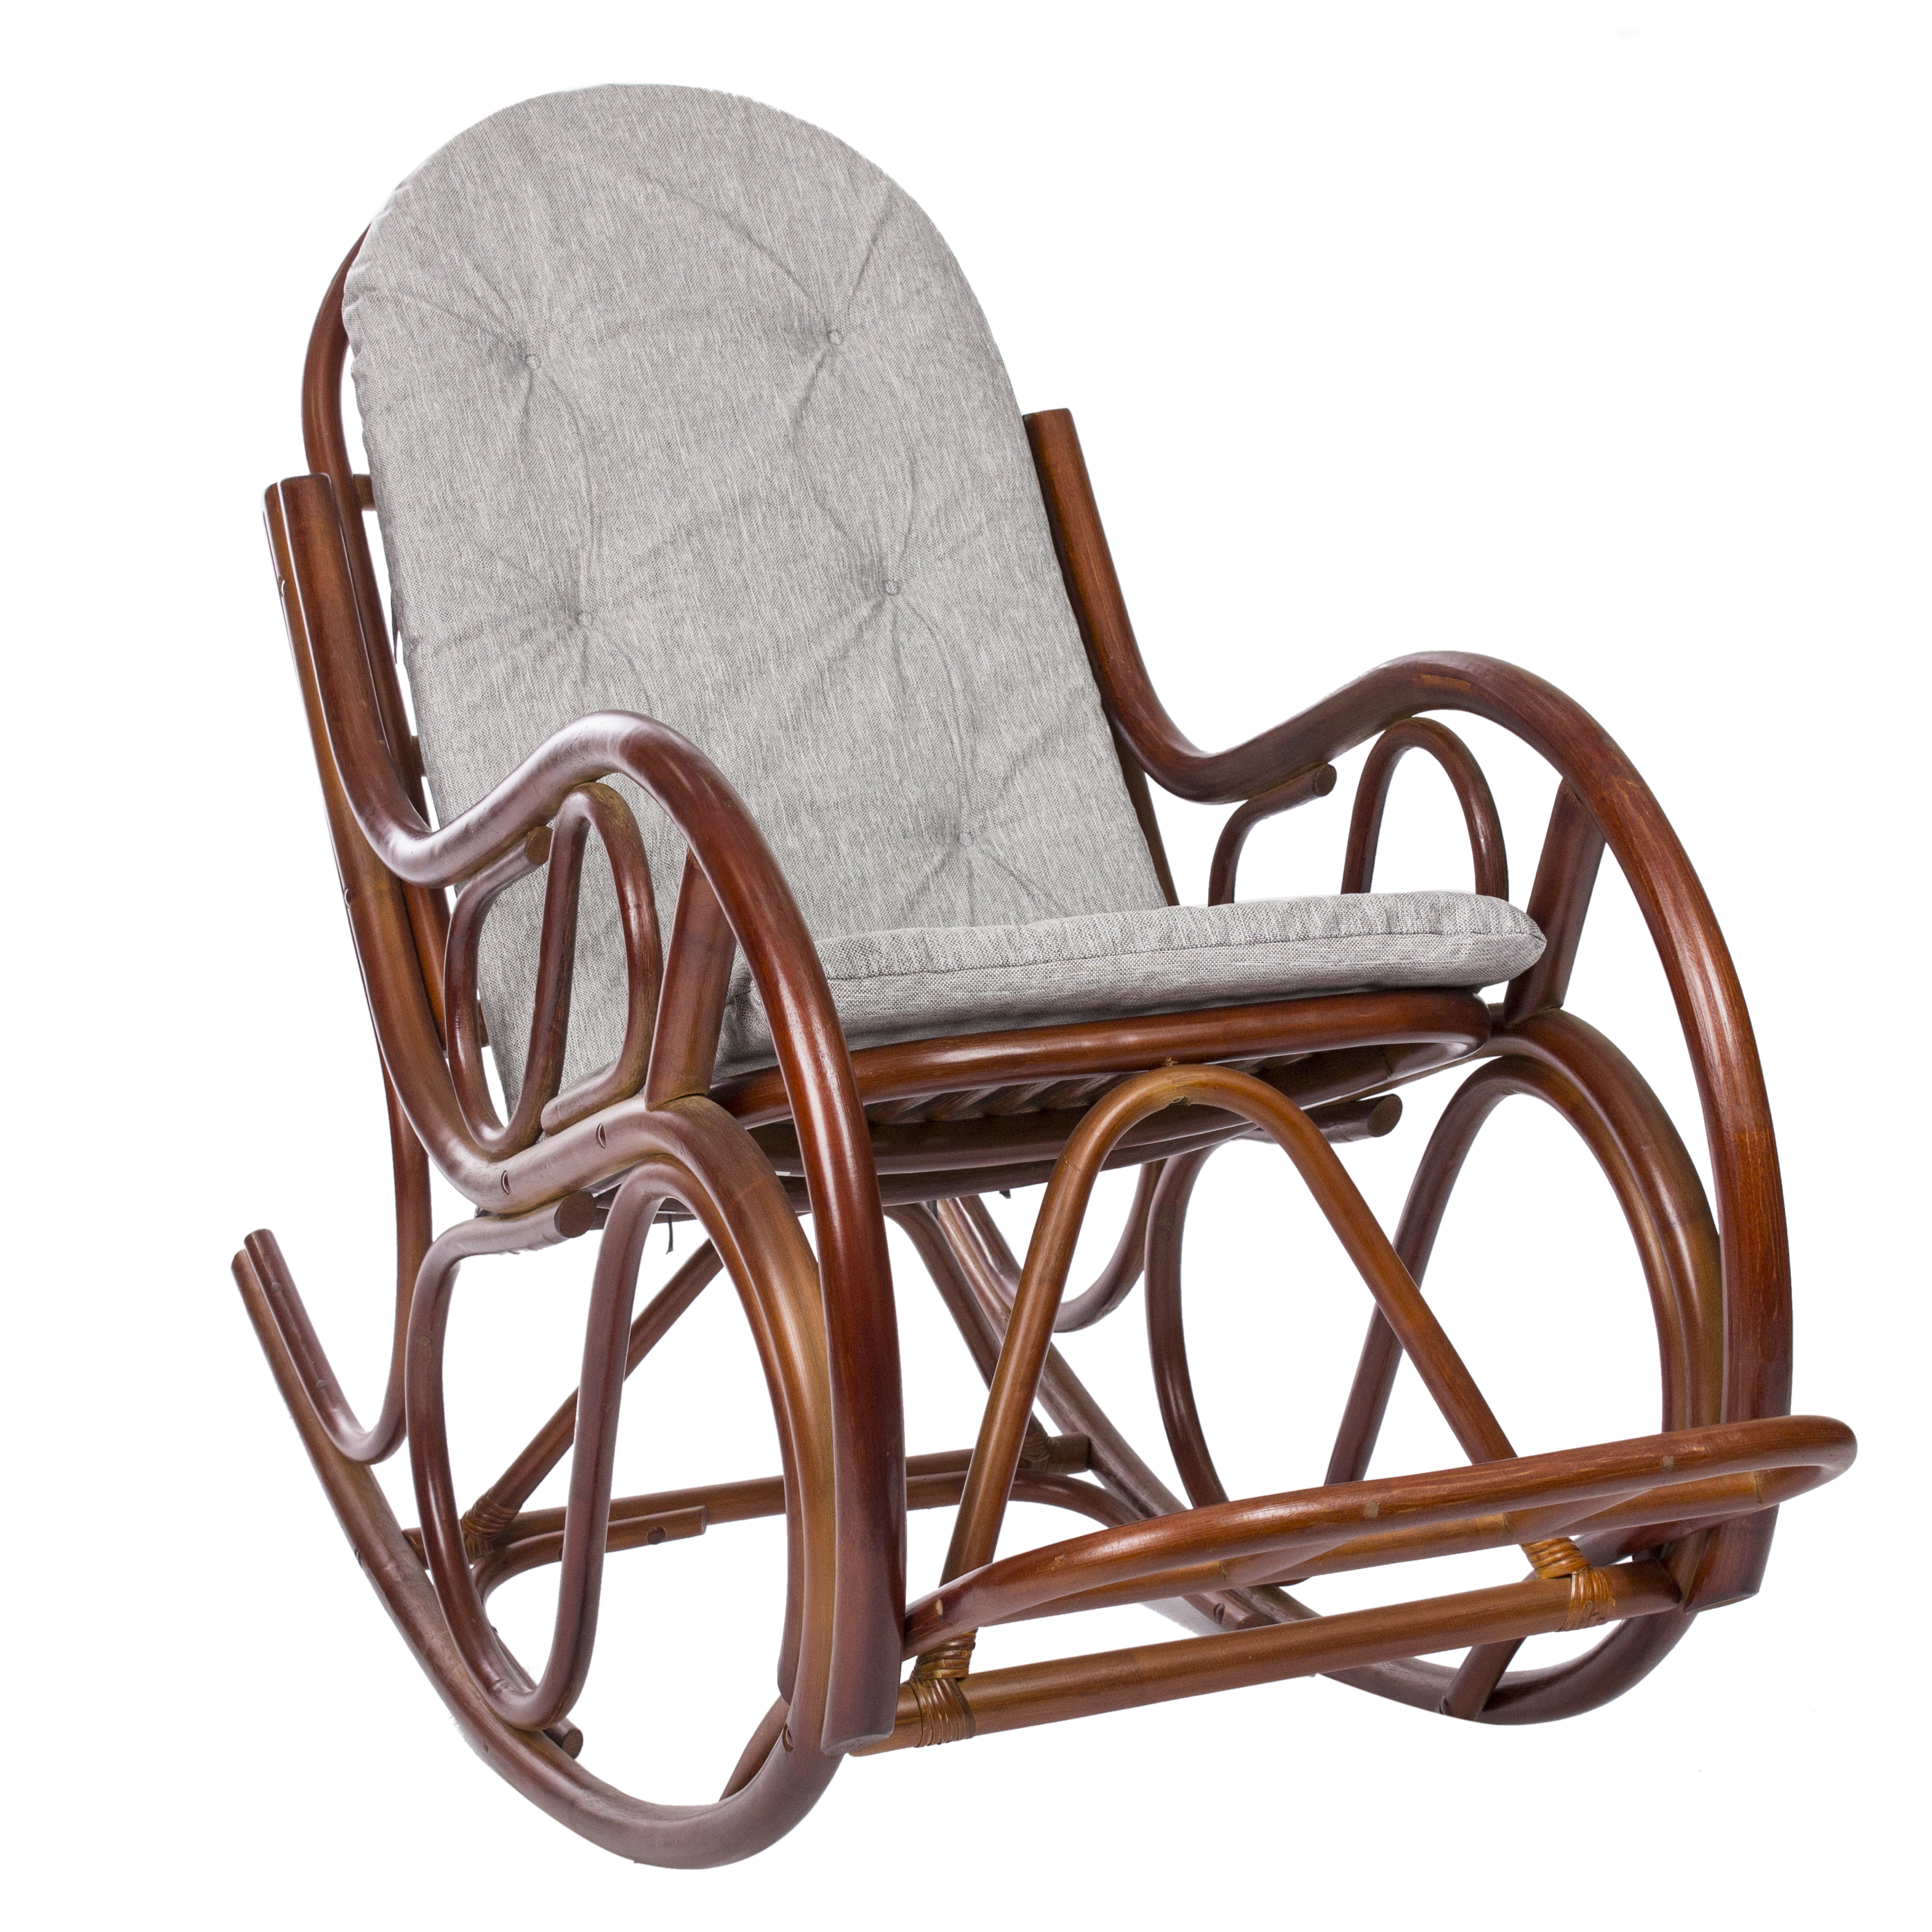 Модели кресла качалки. Mi-001 кресло-качалка Classic, с подушкой. Кресло-качалка с подушкой tg0195c. Кресло качалка Rona Rotang. Кресло-качалка Swivel Rocker с подушкой.